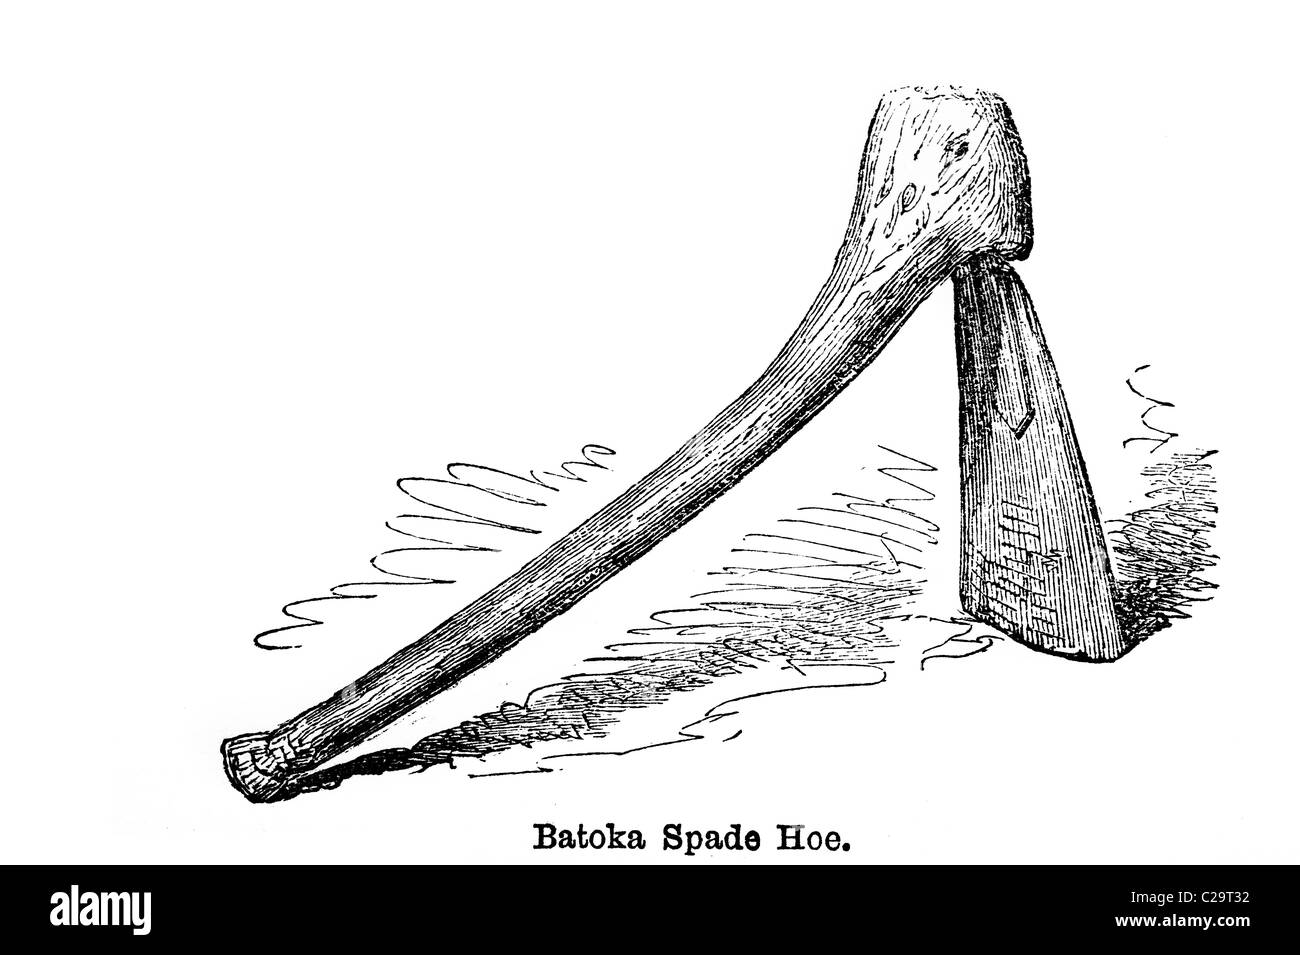 Batoka Spade Hoe, 19th century illustration Stock Photo